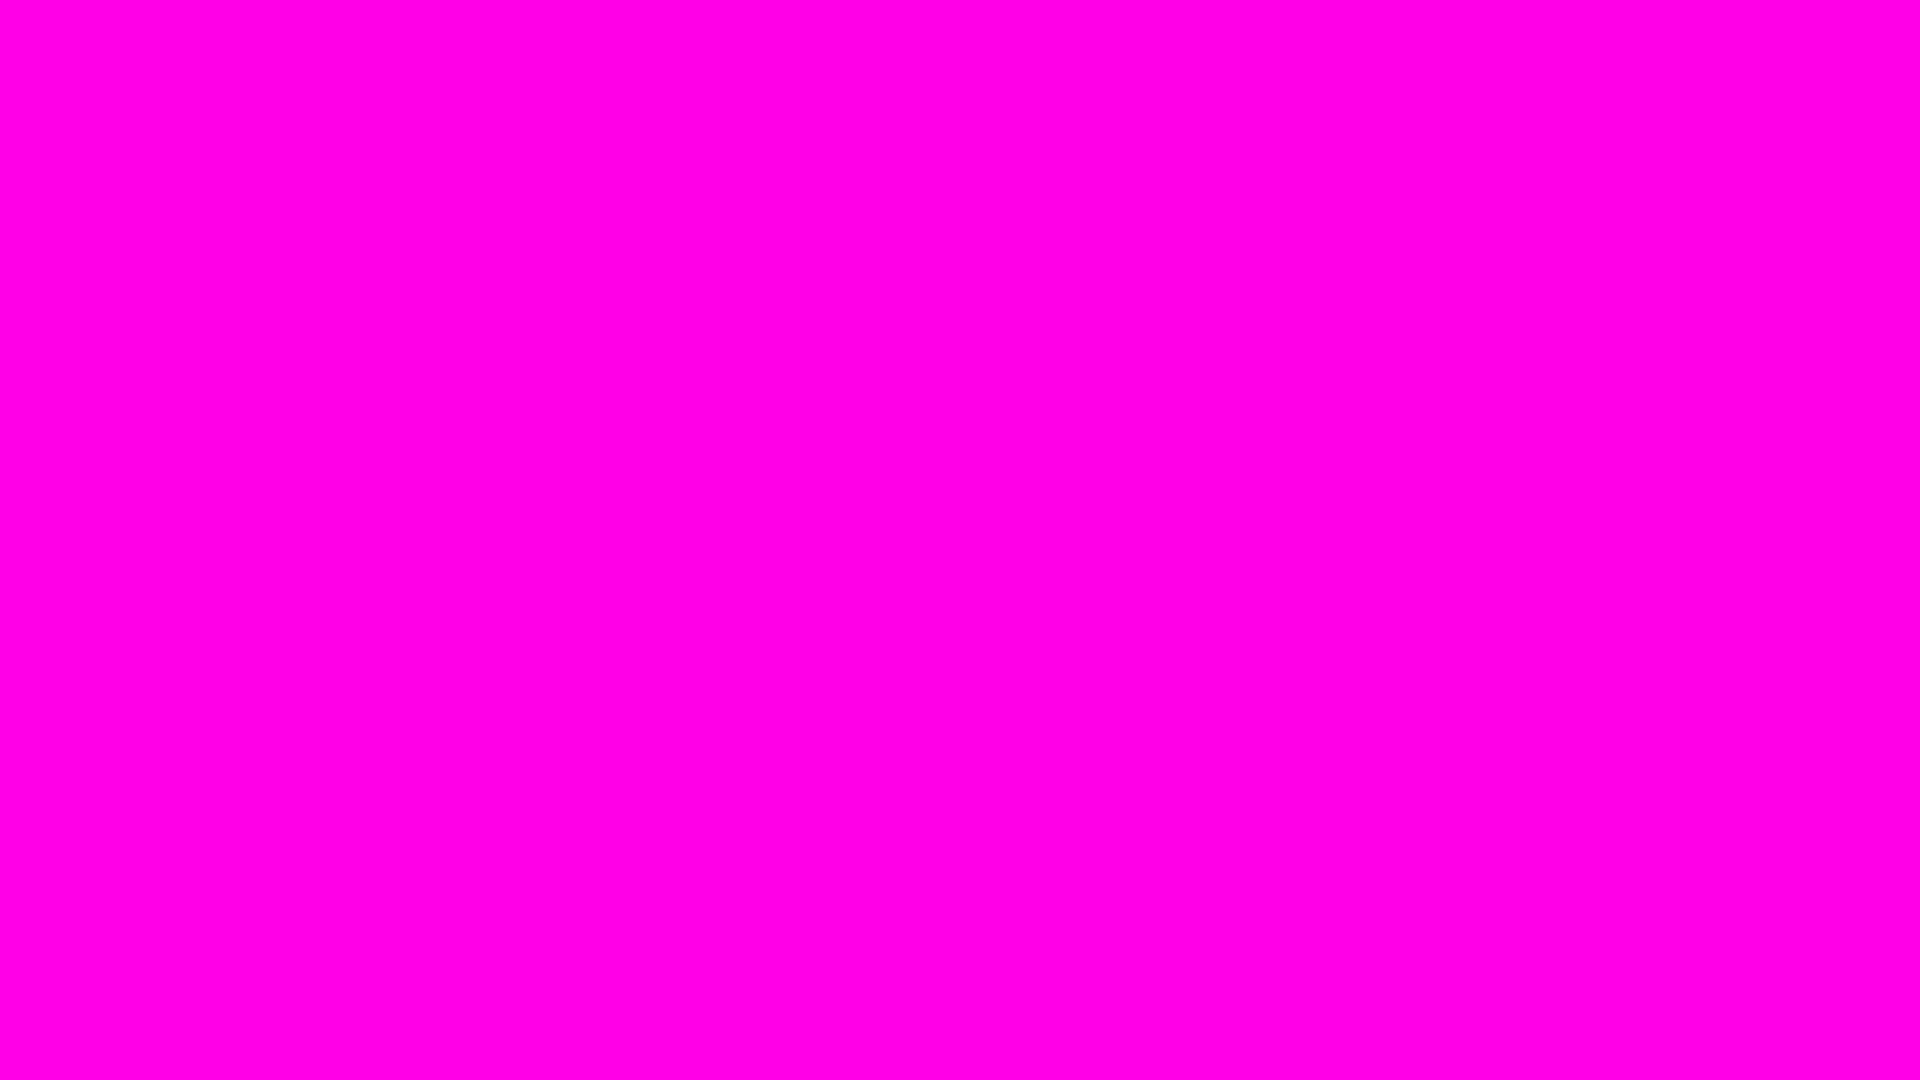 Hot Pink In Plain Light Shade Wallpaper